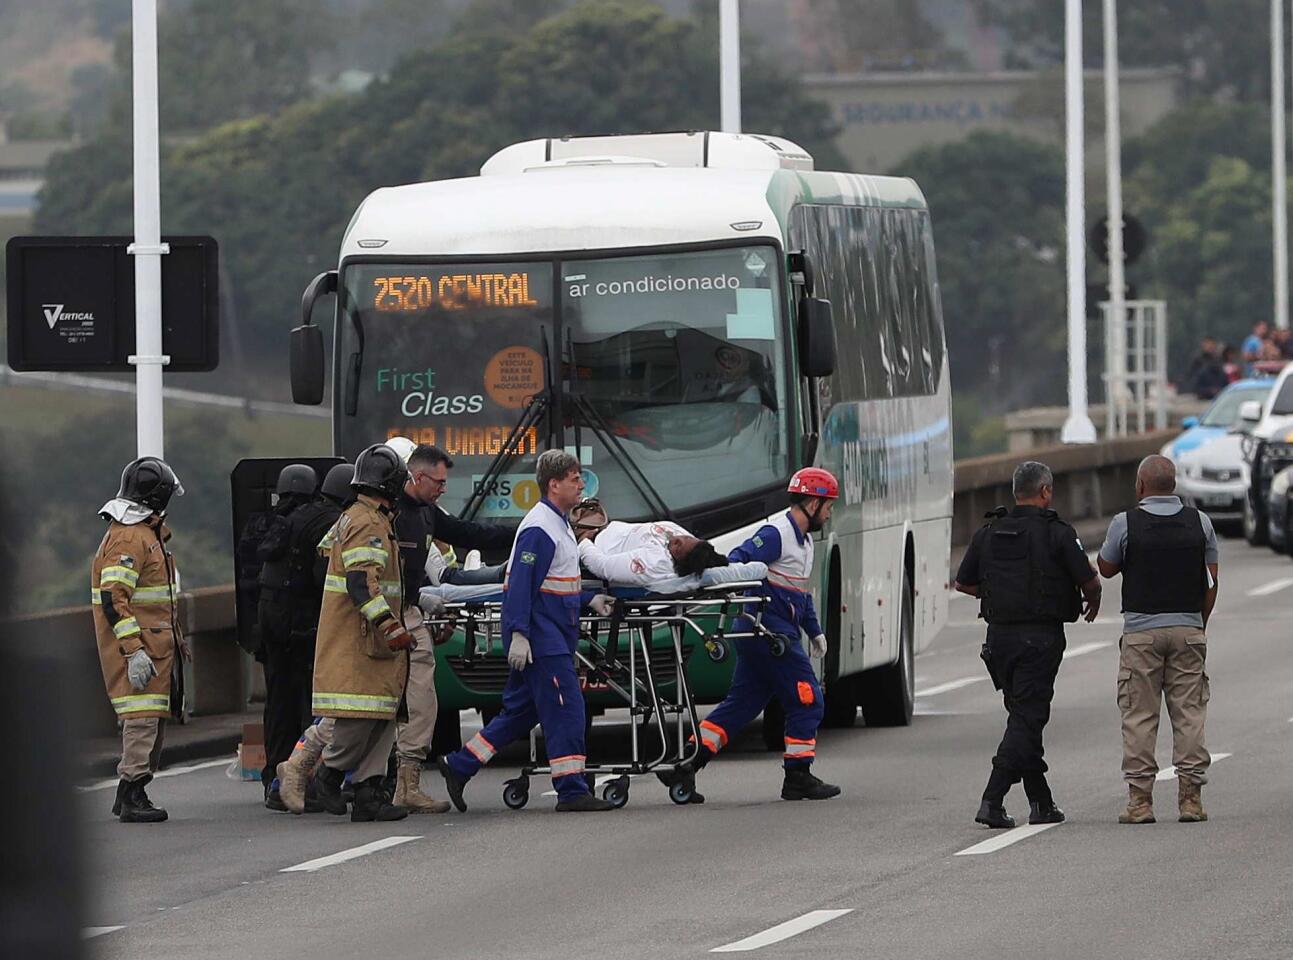 A man hijacks a bus in Brazil